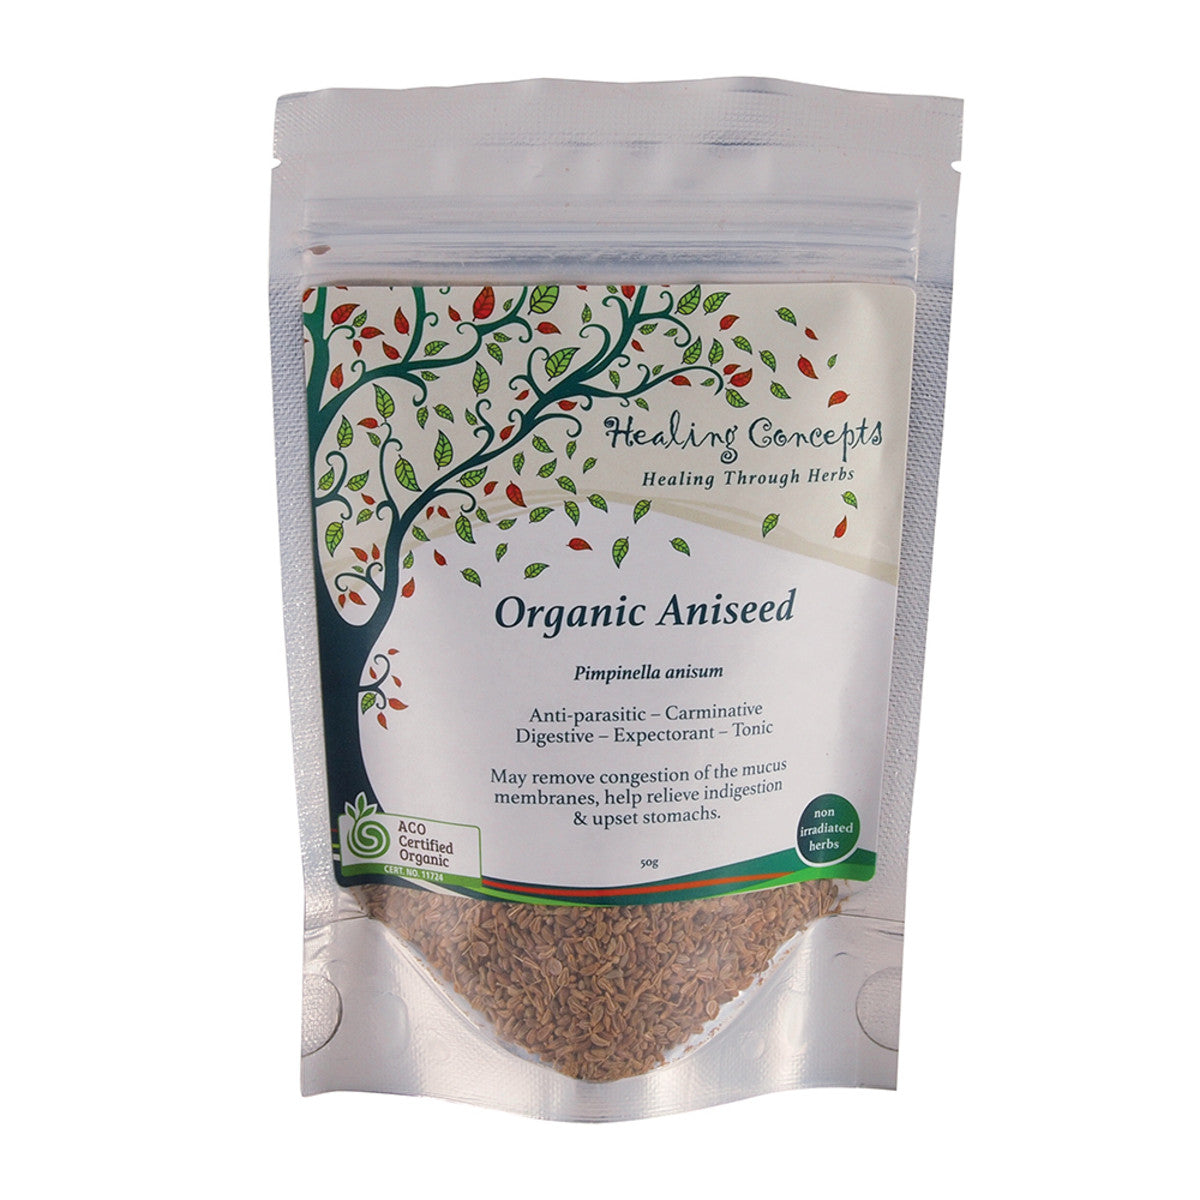 Healing Concepts Aniseed Tea 50g, Certified Organic